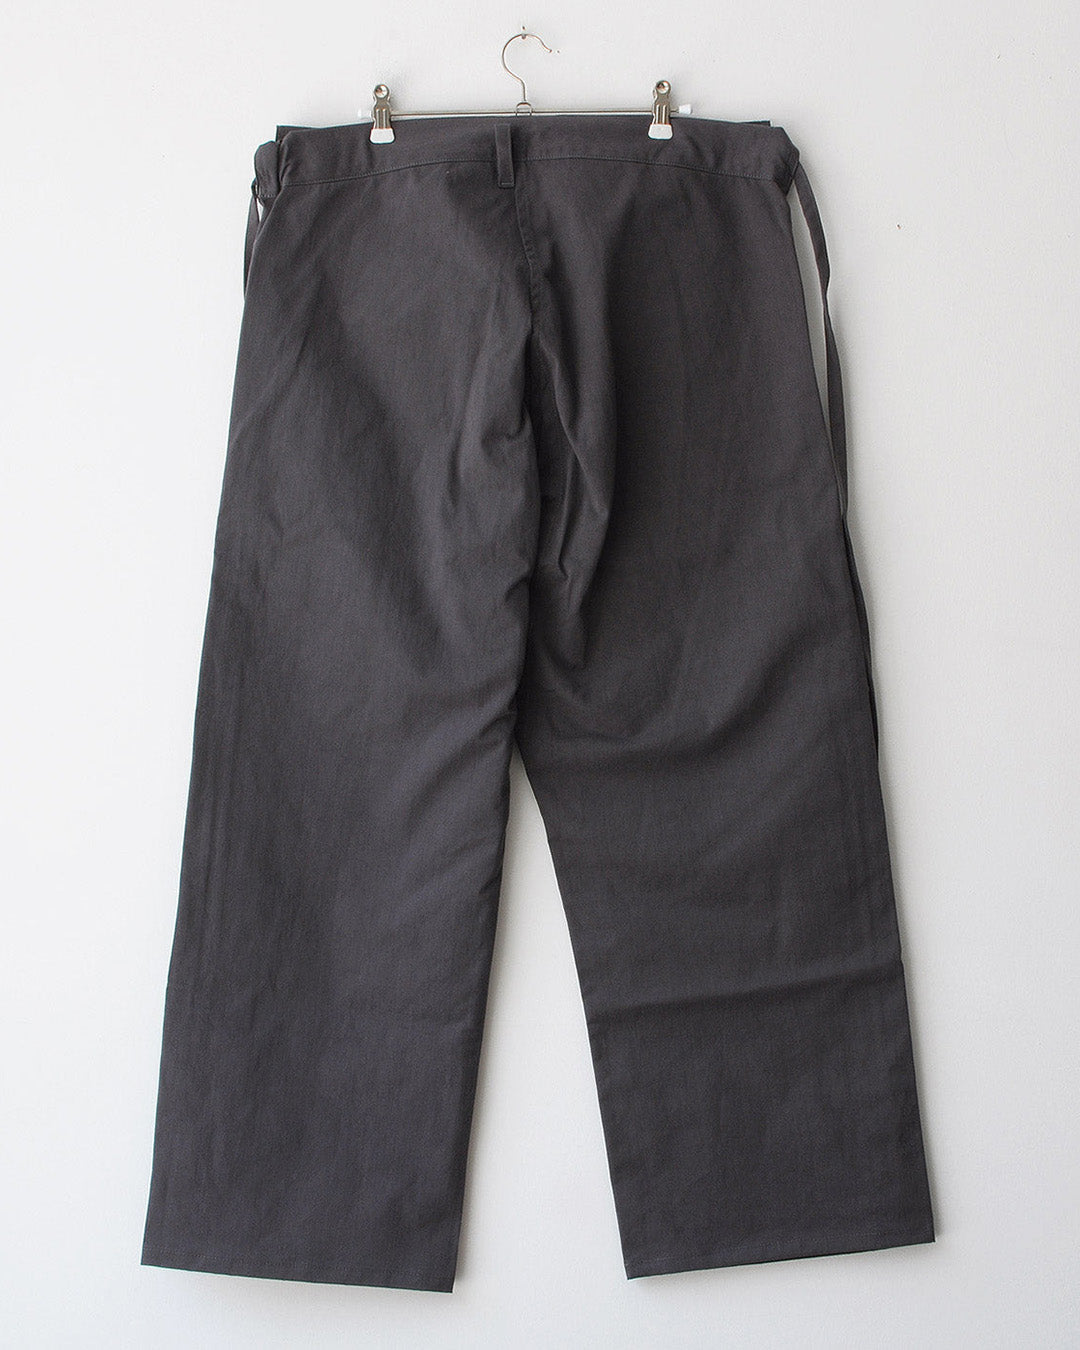 TUKI karate pants / german gray / solid twill